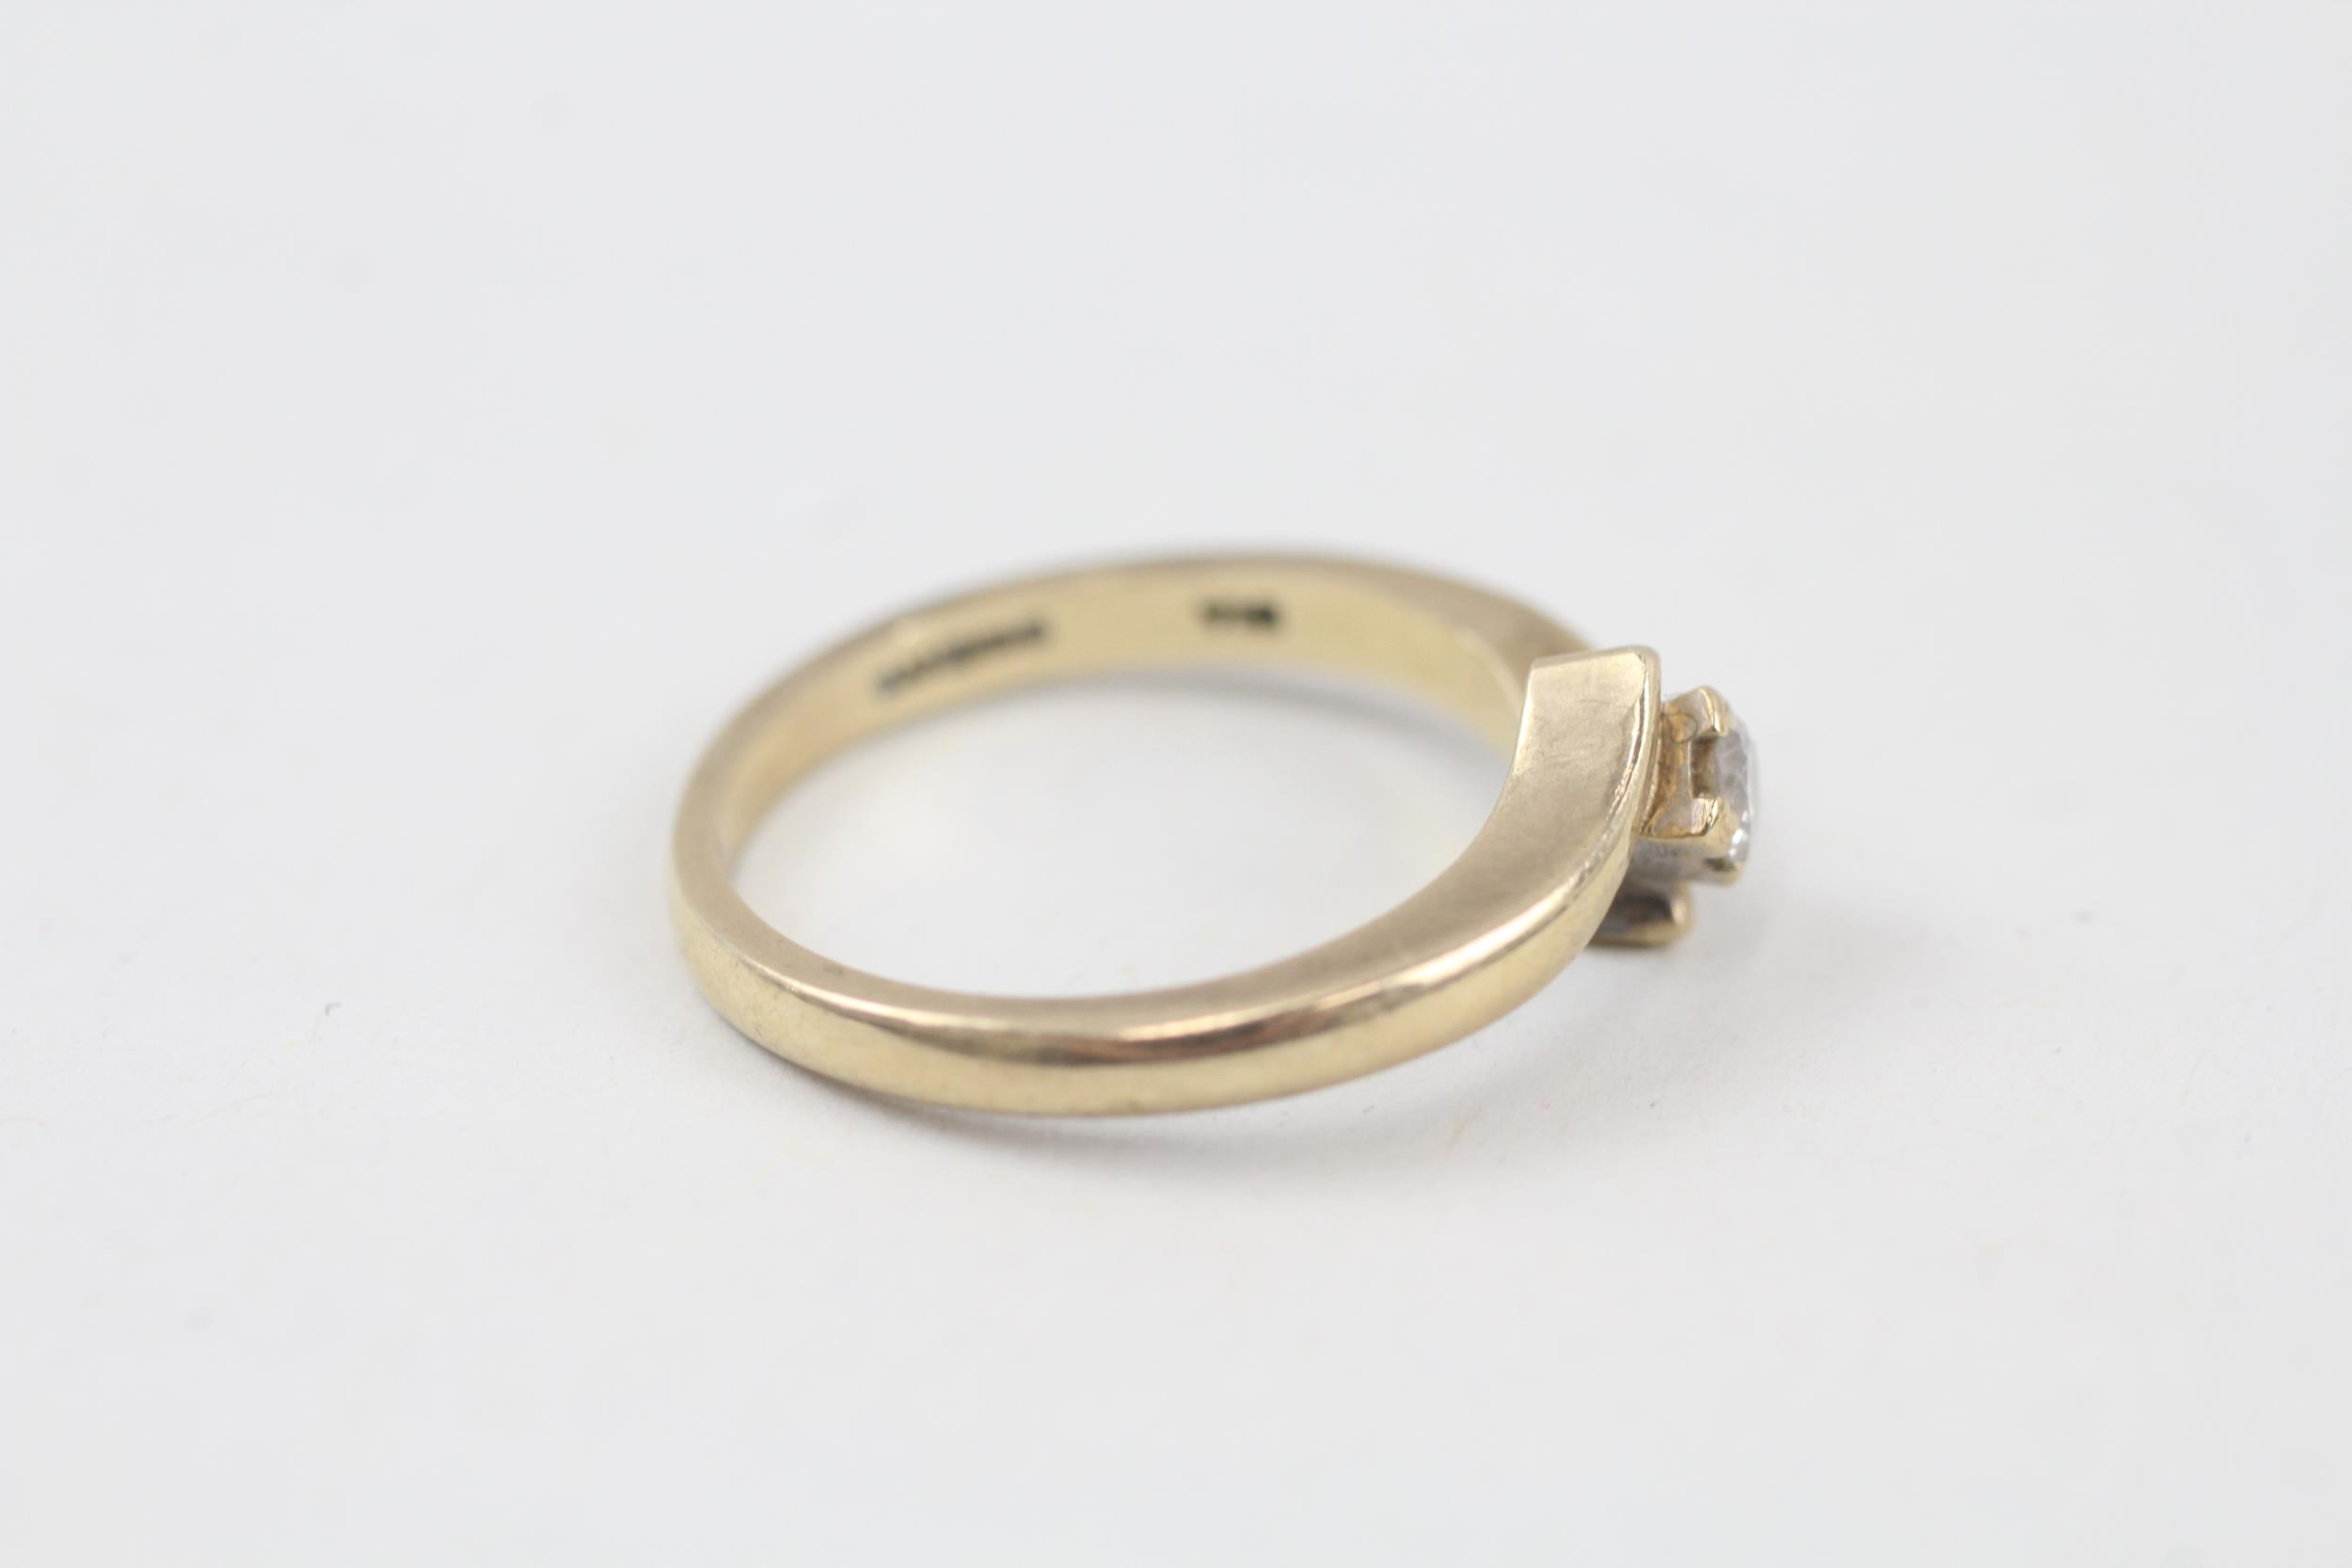 9ct gold circular cut diamond single stone ring Size M - 2.6 g - Image 7 of 7